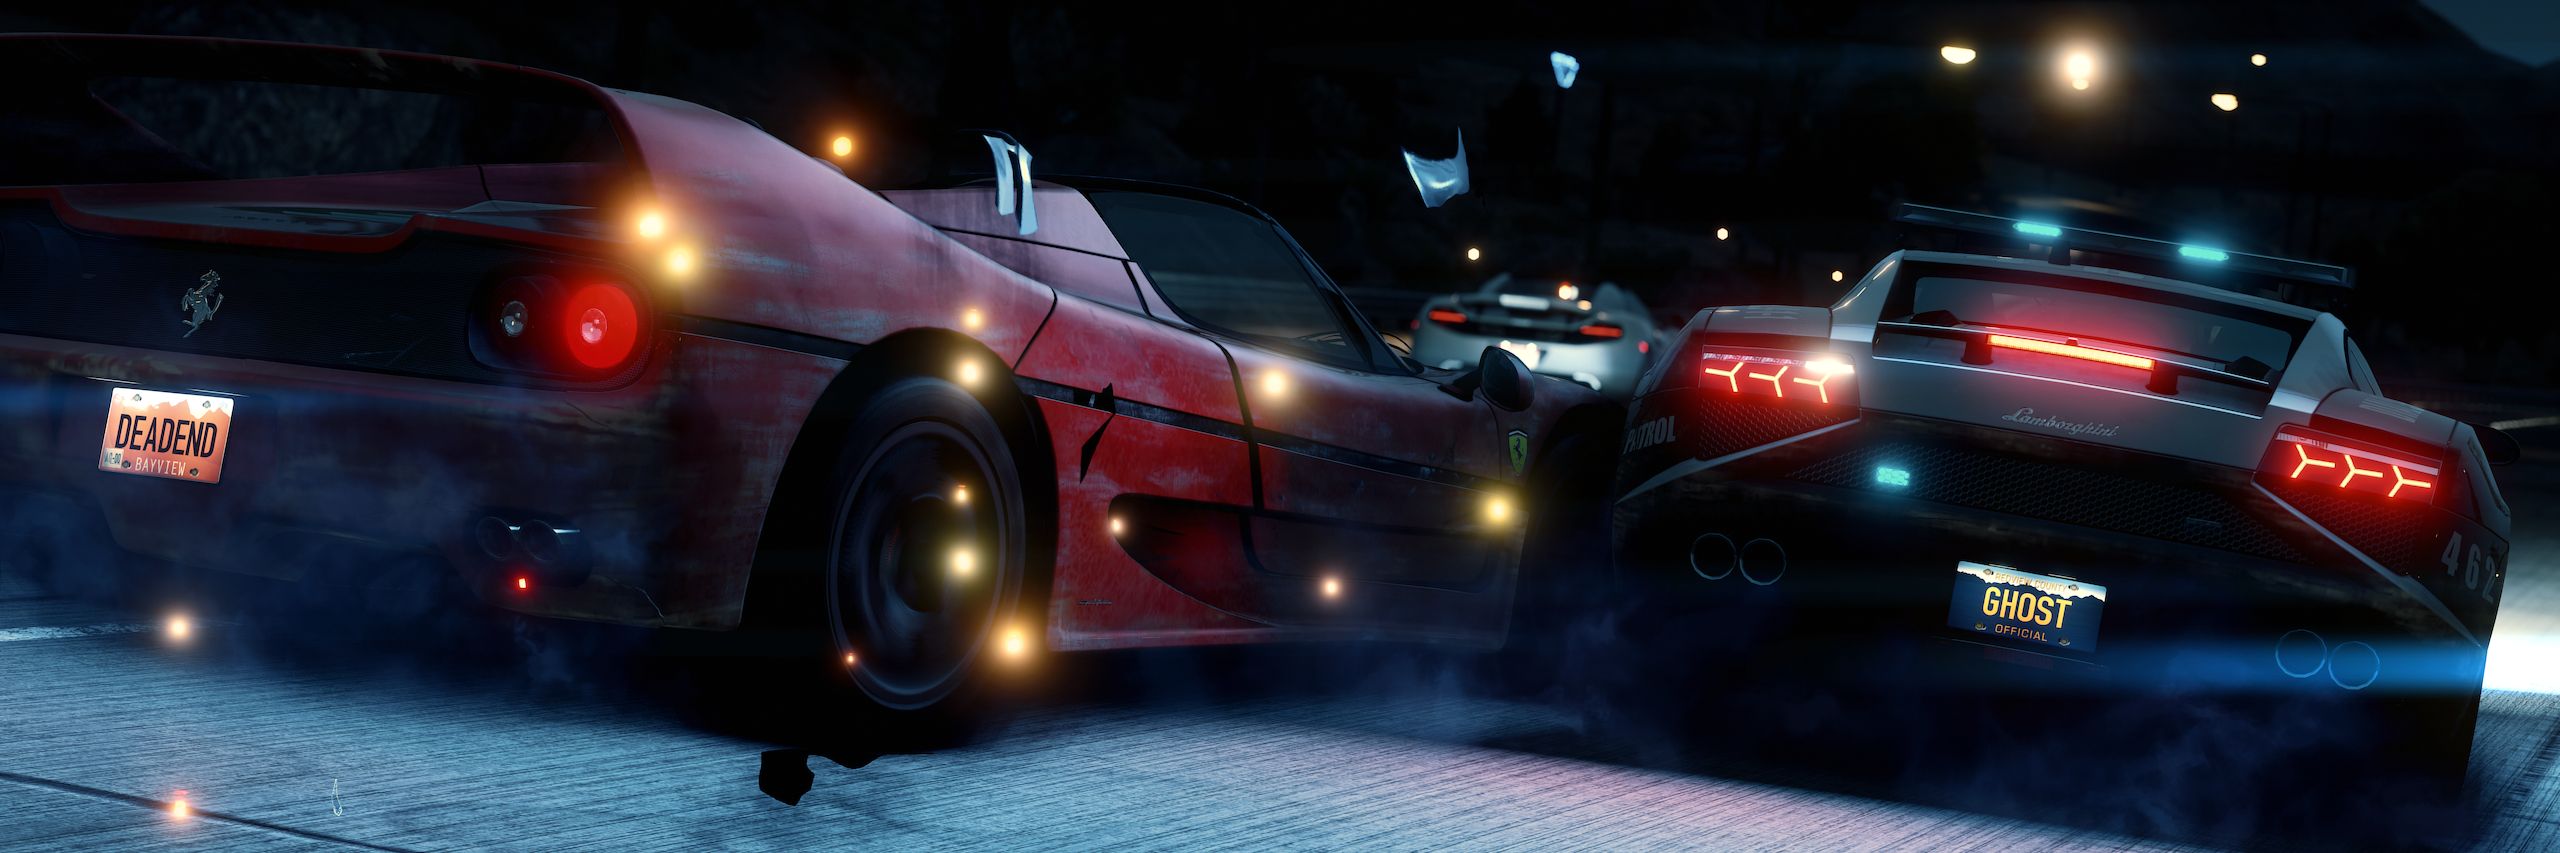 Игра ночные гонки. NFS 2015. Need for Speed (игра, 2015). Need Fo Speed последняя версия. Need for Speed Heat полиция.